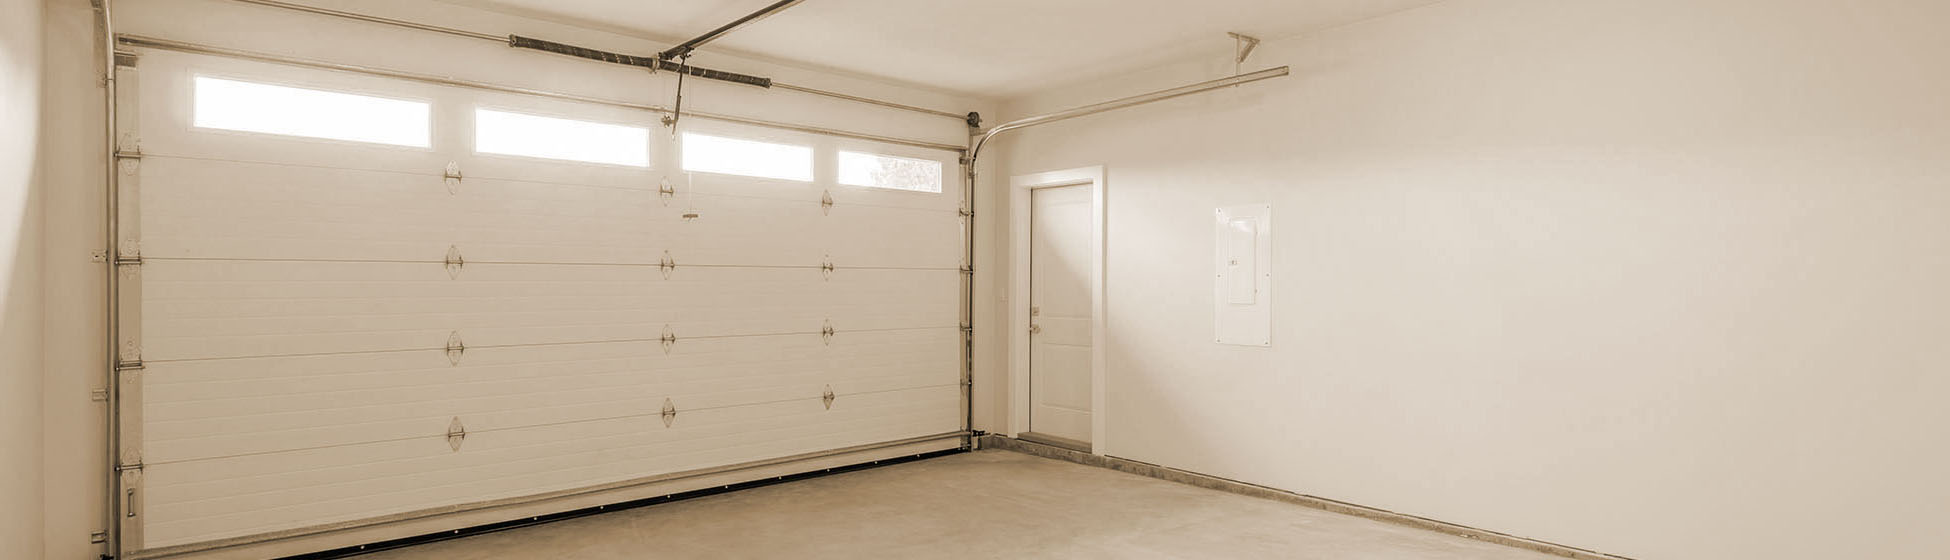 Reparation porte garage